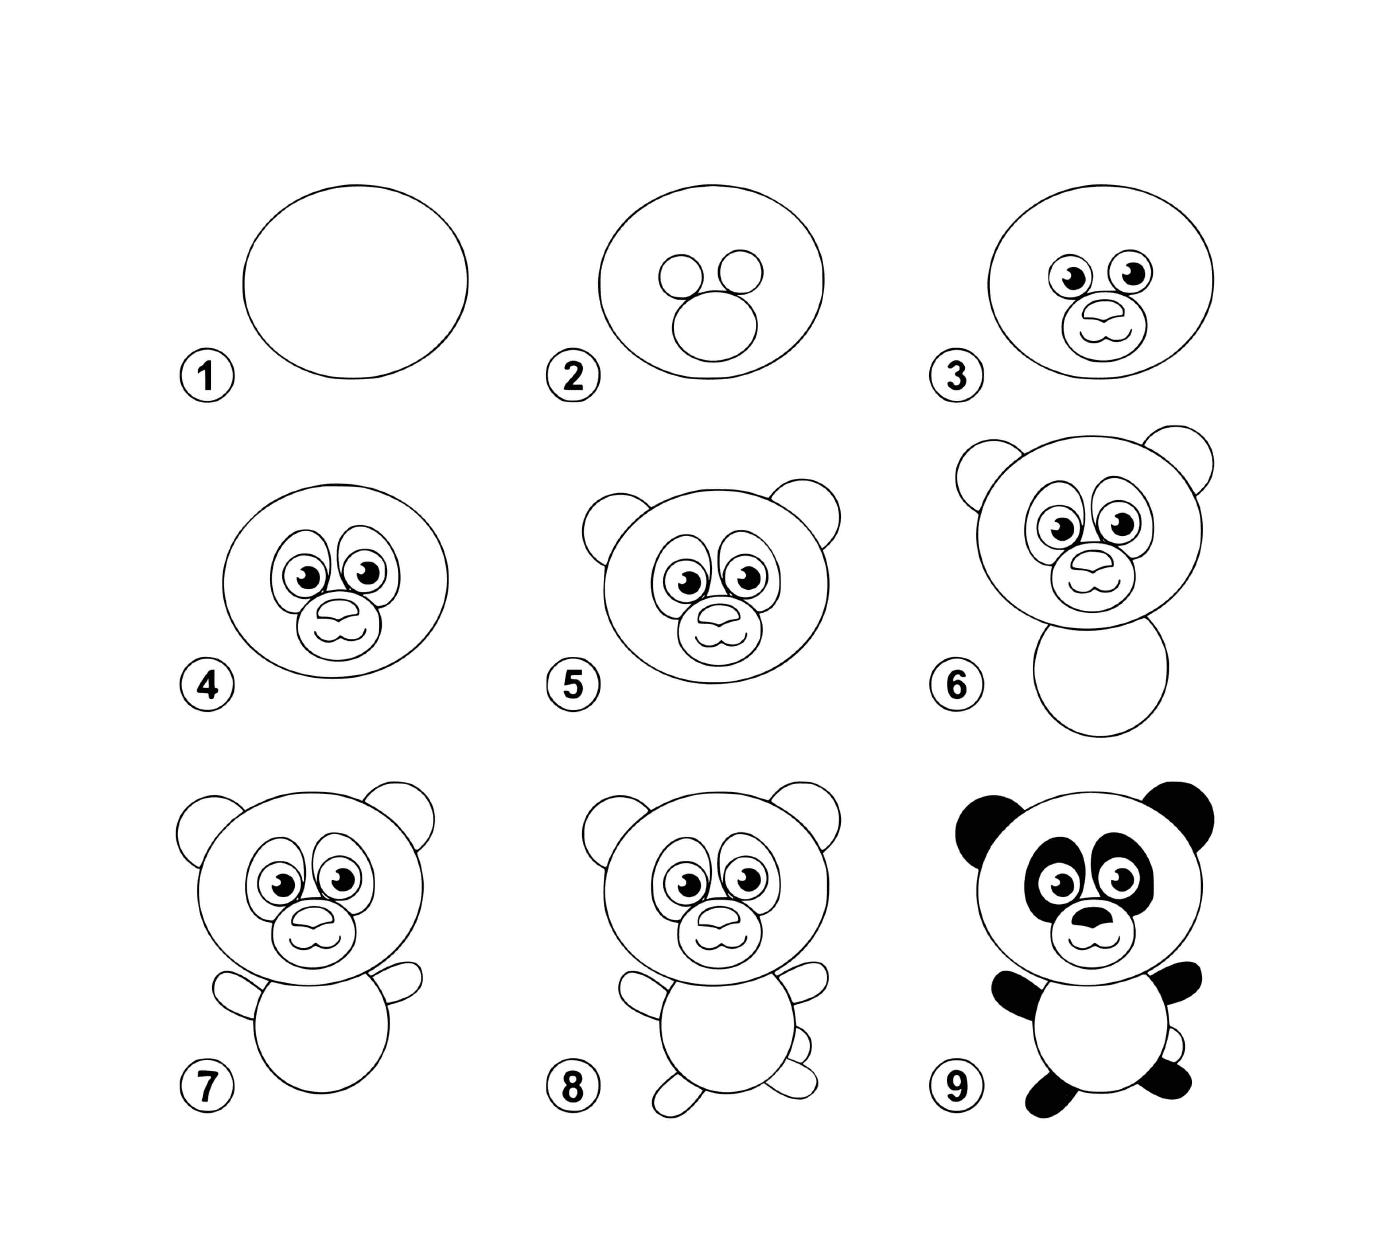  Как нарисовать панду шаг за шагом 